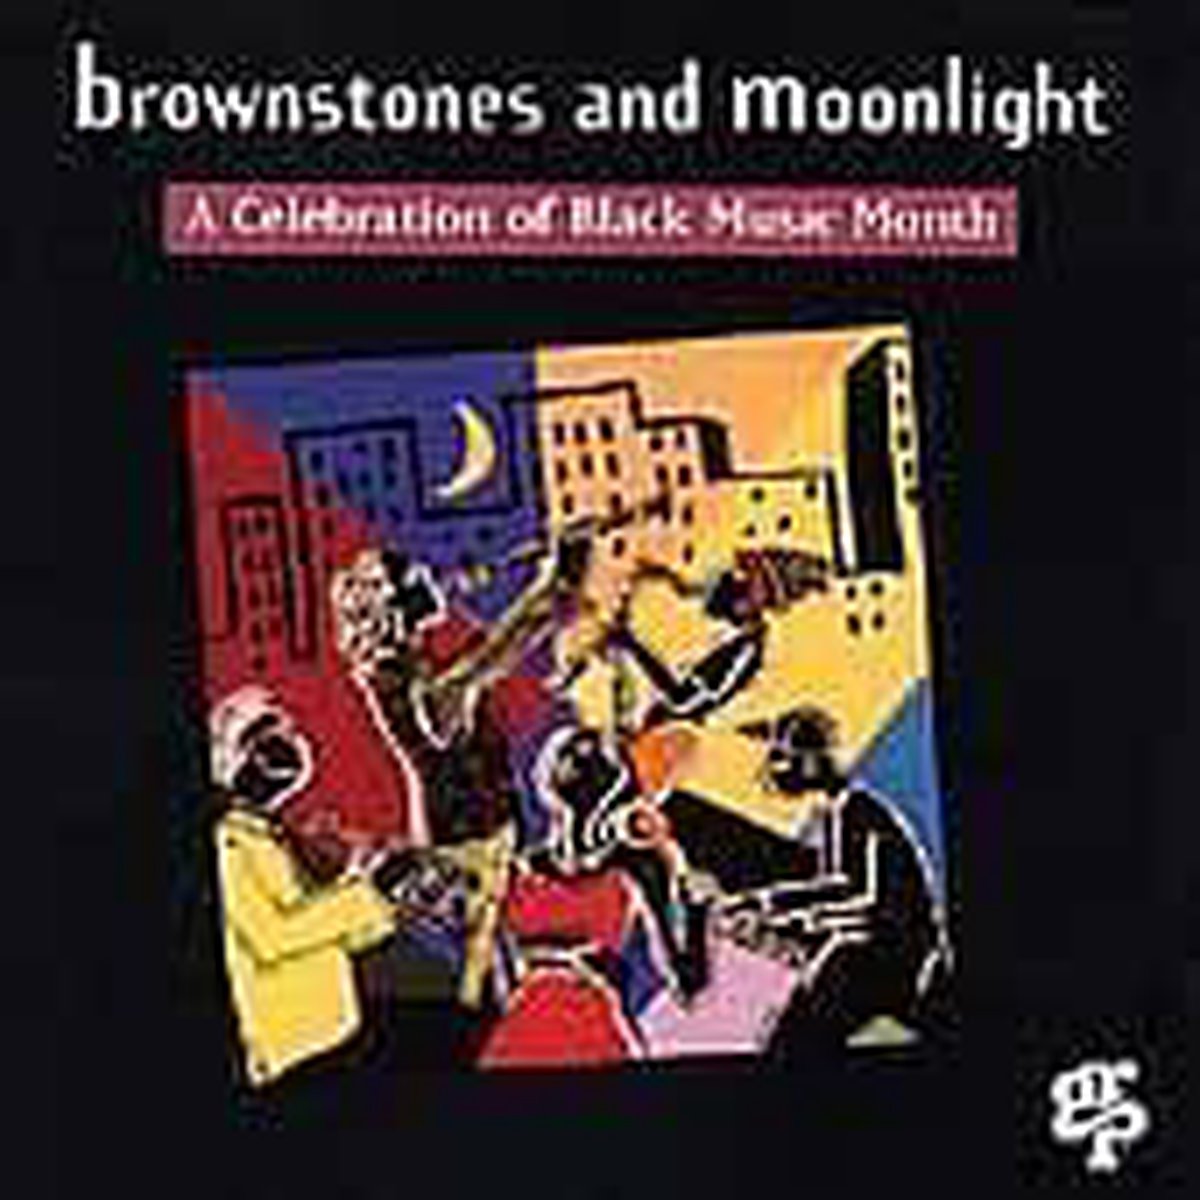 Brownstones & Moonlight: Celebration of Black Music Month - various artists